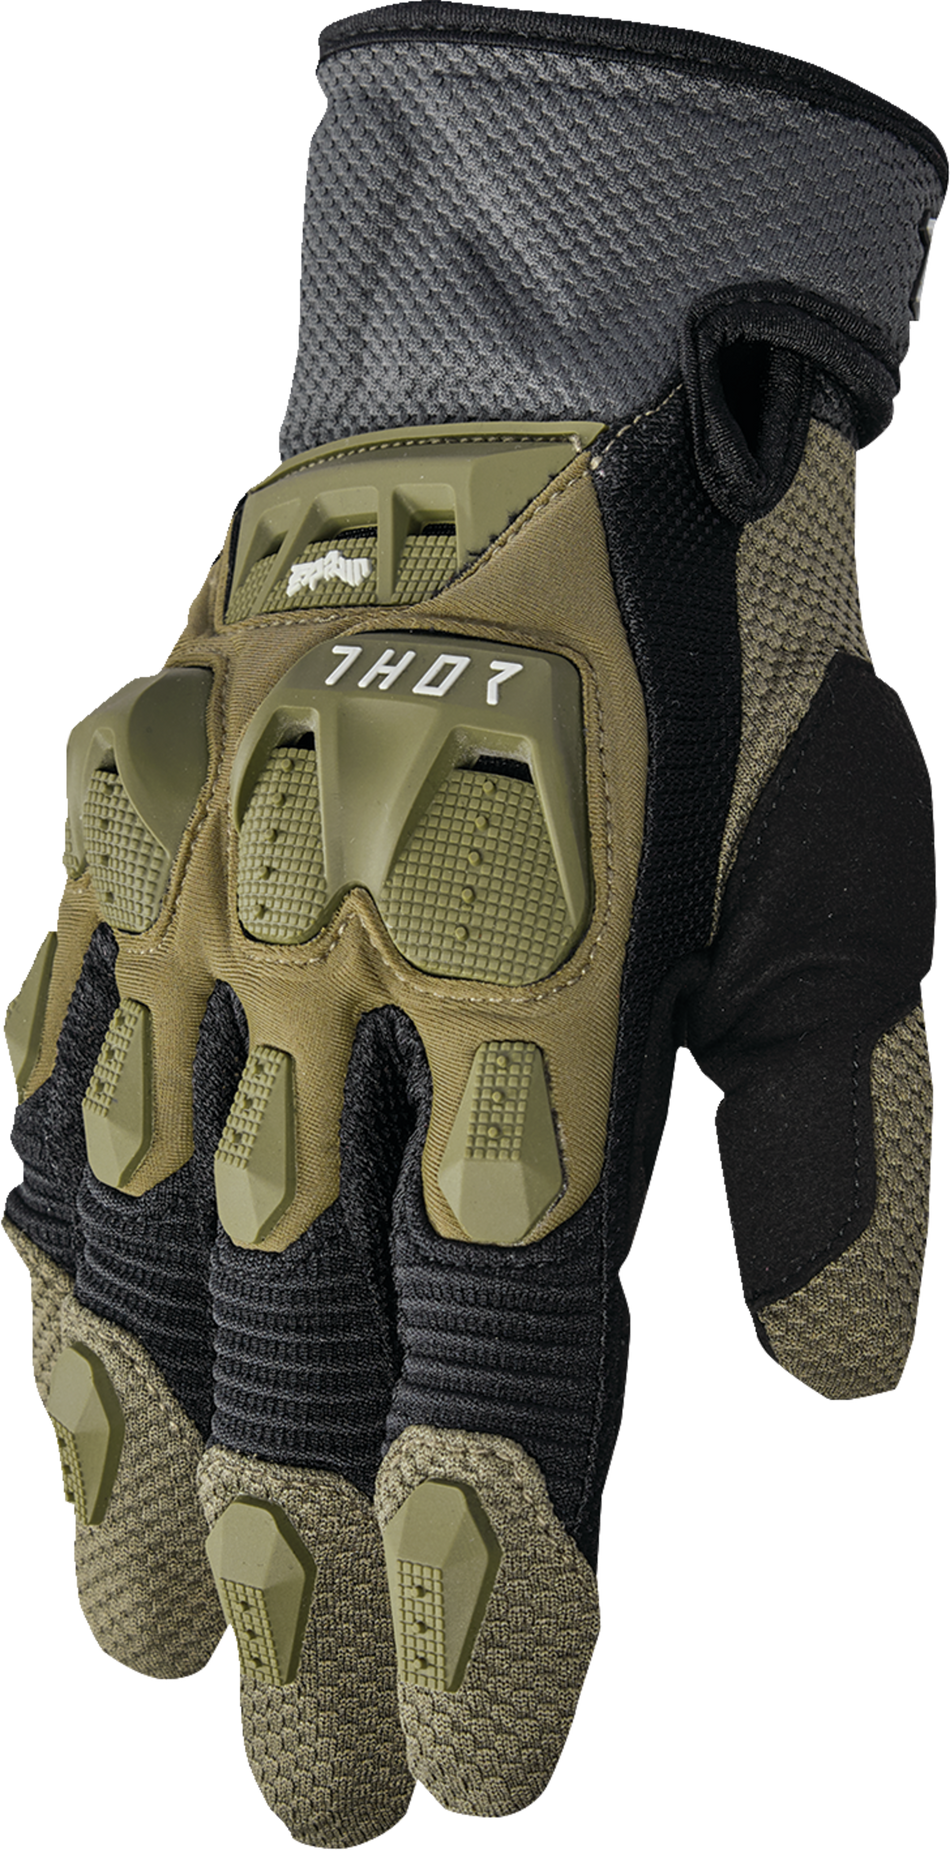 THOR Terrain Gloves - Army/Charcoal - Medium 3330-7287